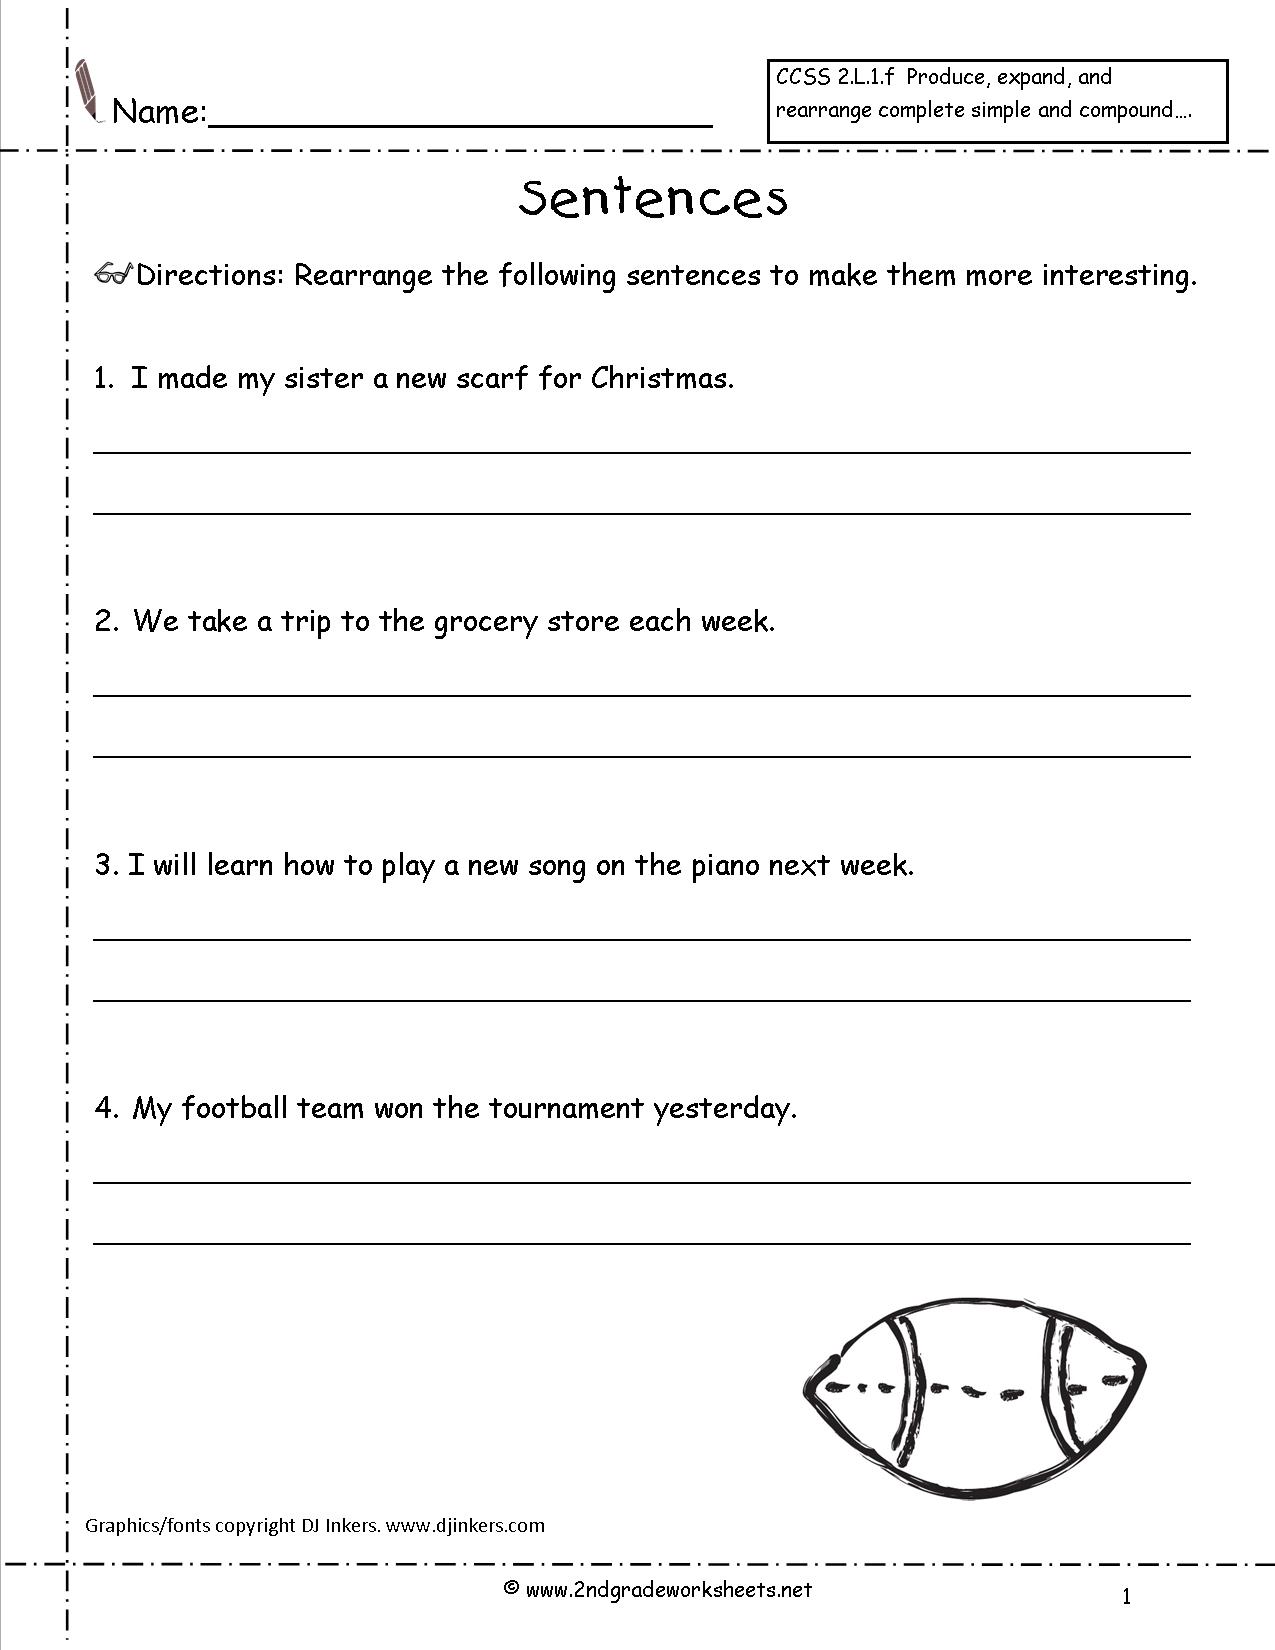 Practice Worksheet For Writing Complete Sentences